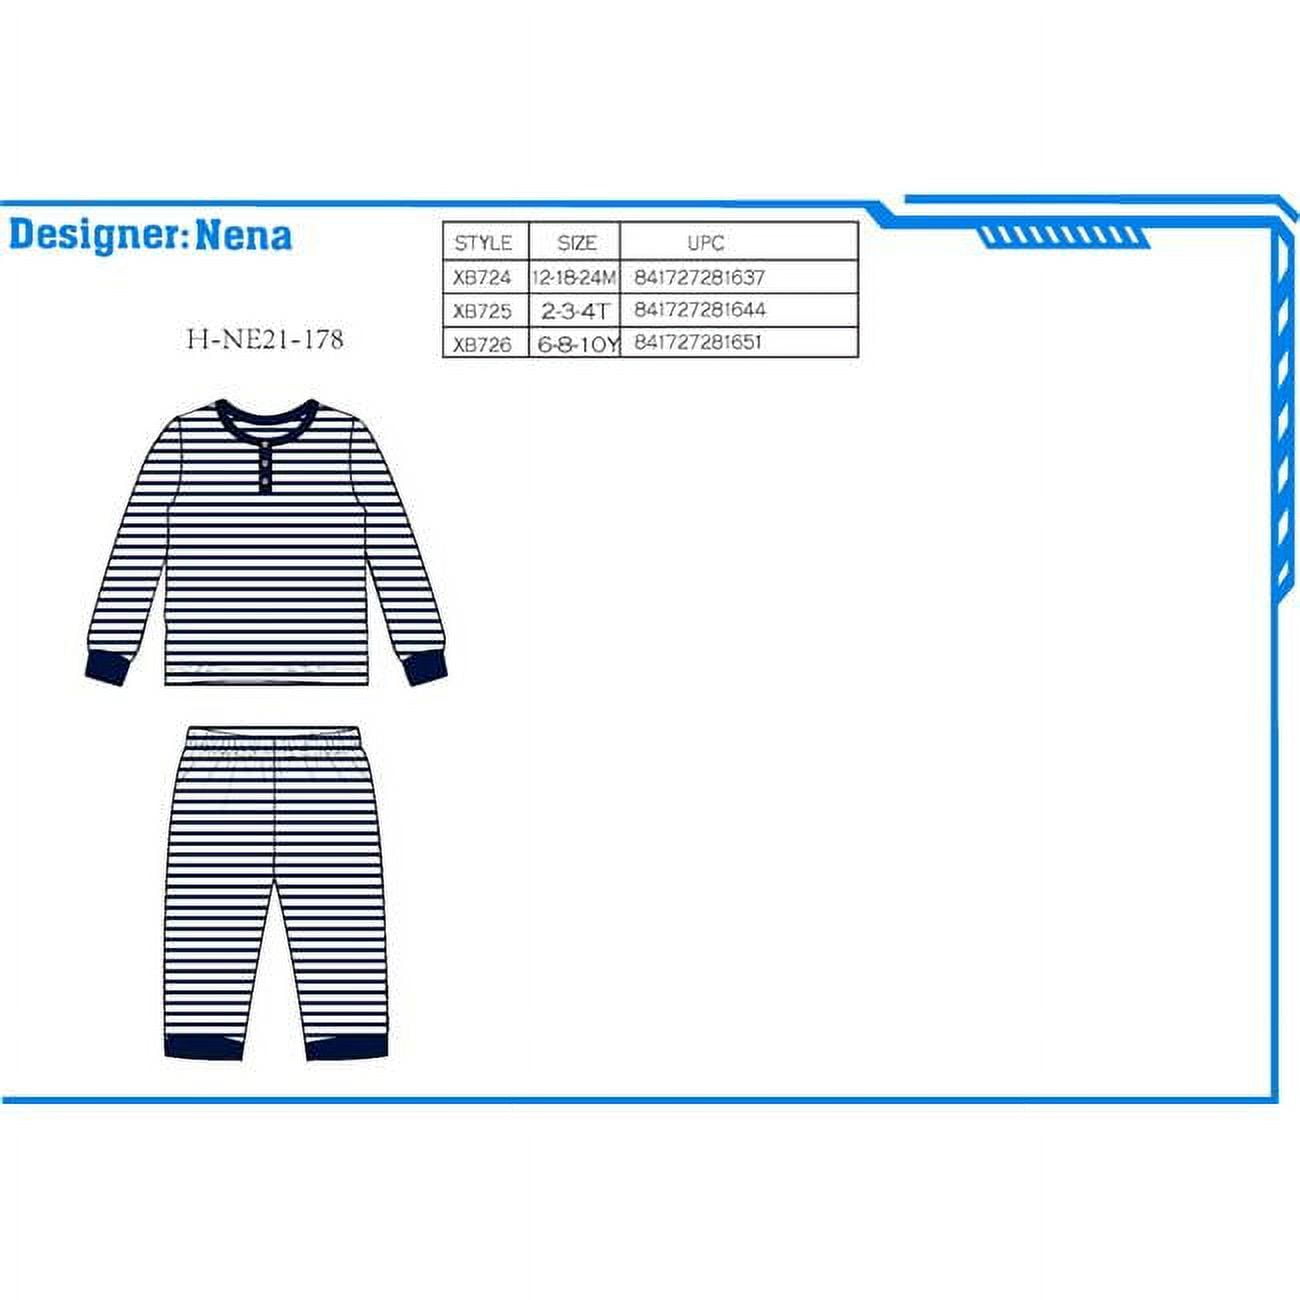 2363815 Baby Boys Long Sleeve Striped Pajamas, Navy - Size 12-24M - Case of 24 -  Sweet & Soft